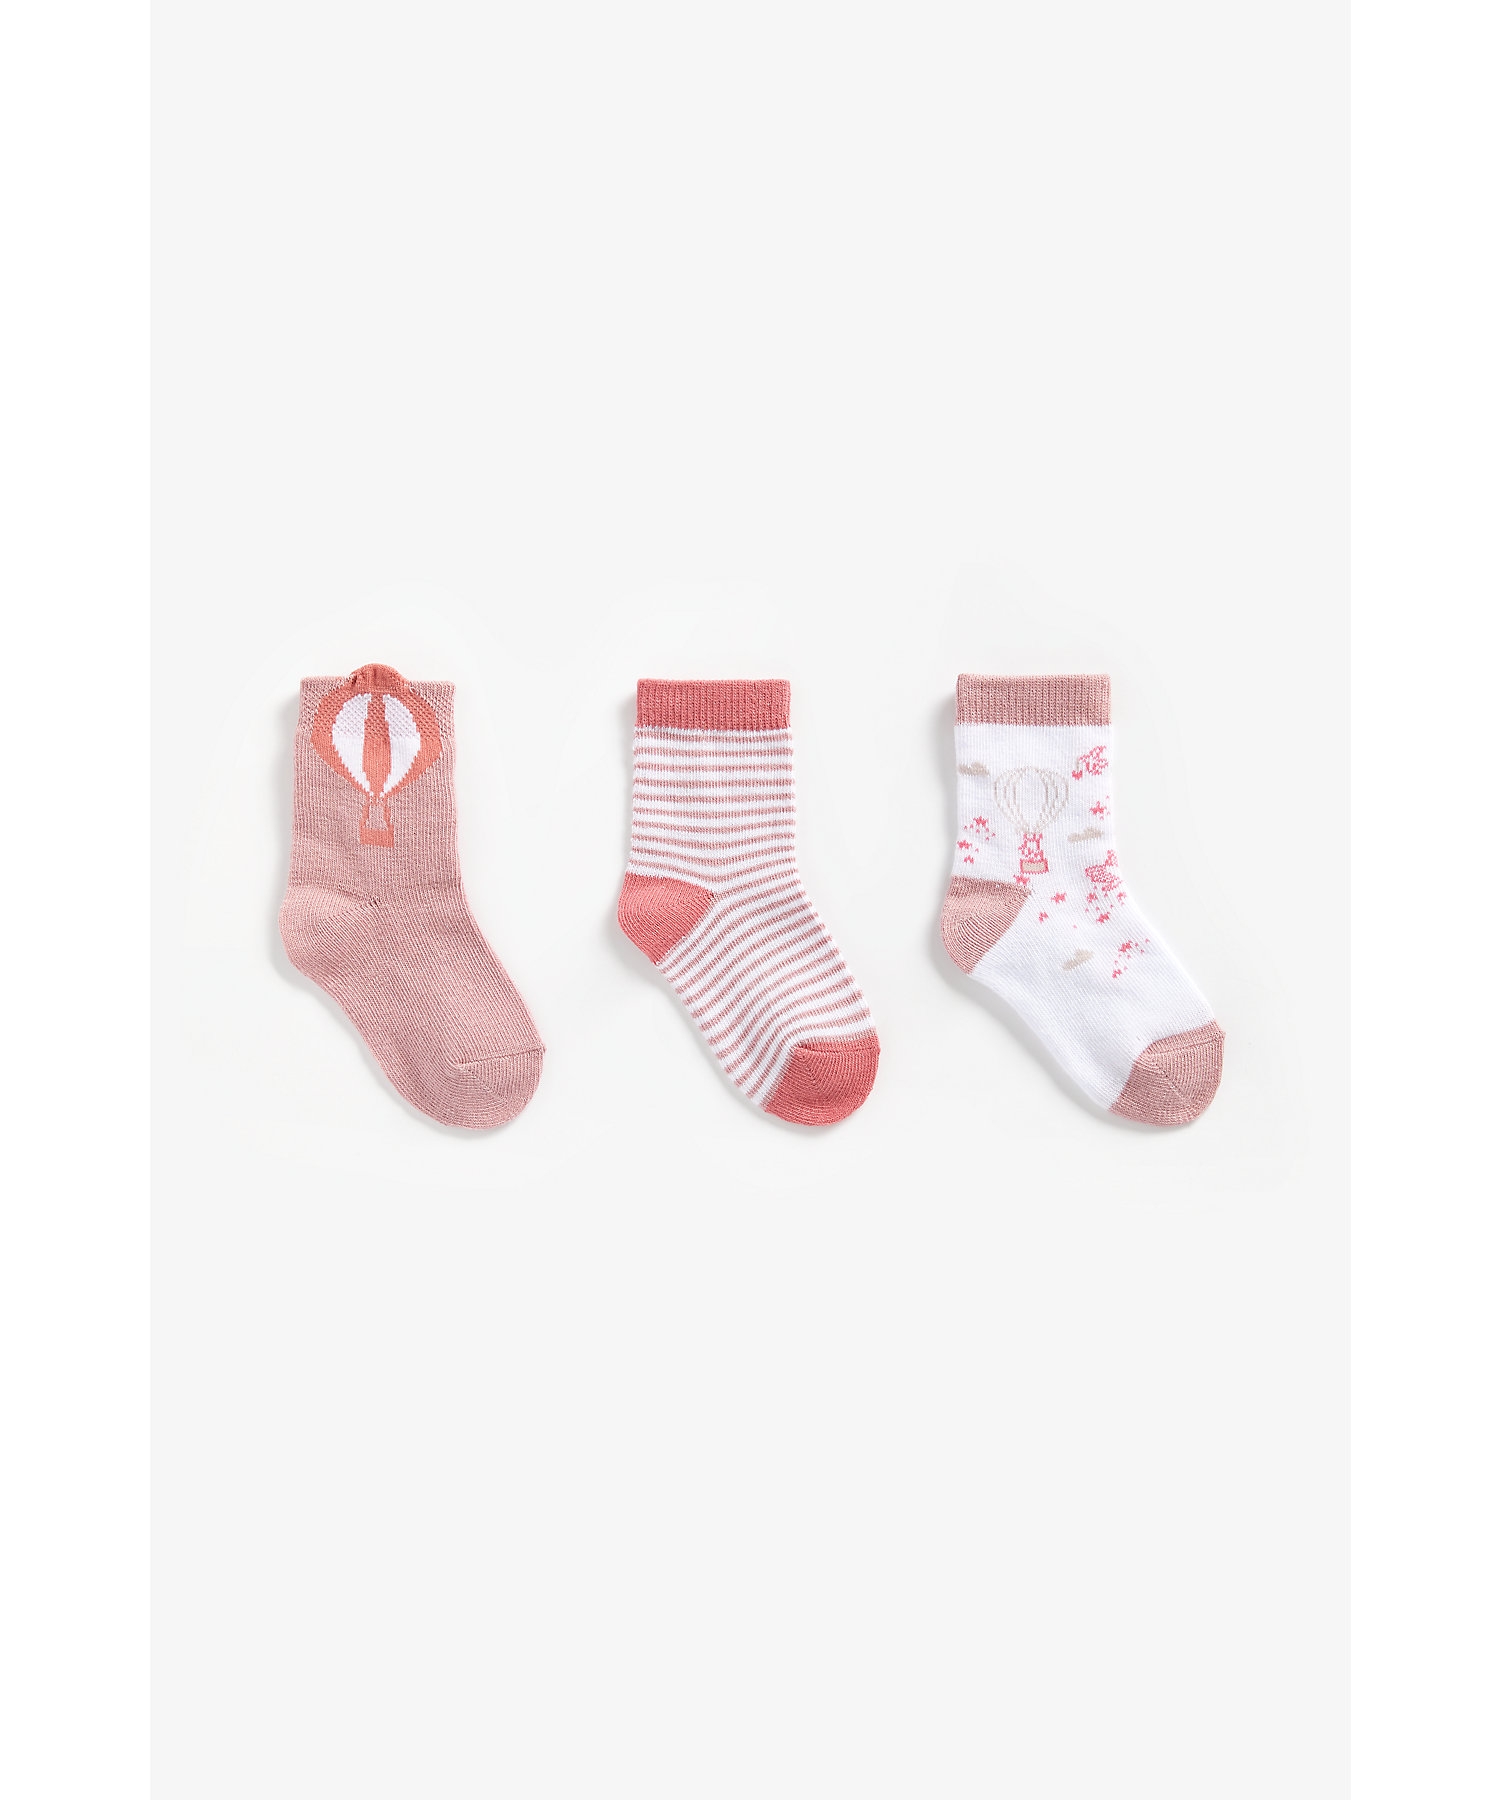 Girls Socks Hot Air Balloon Design - Pack Of 3 - Pink